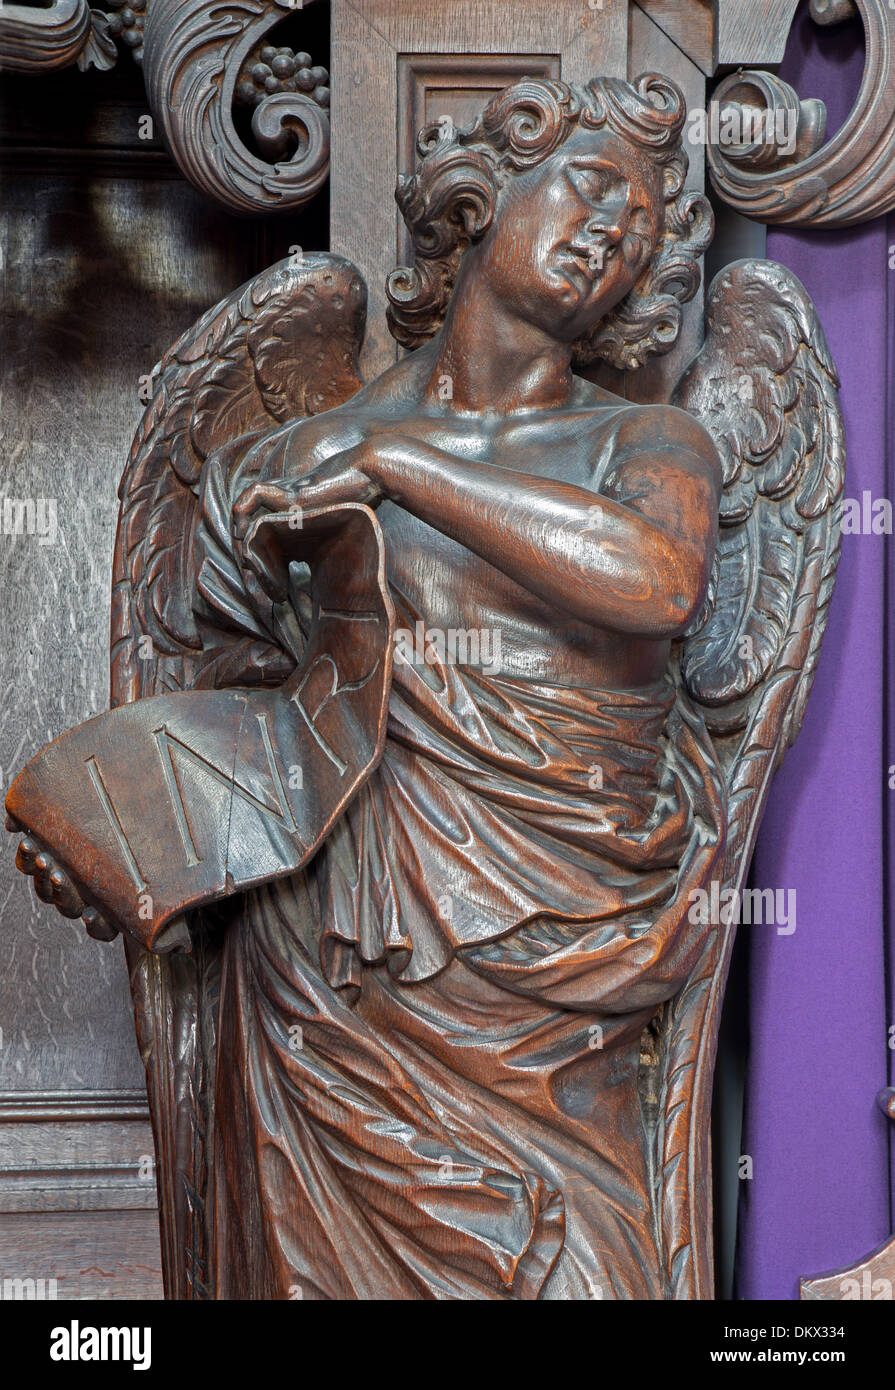 MECHELEN - 4 SEPTEMBER: Geschnitzte Engelsstatue mit der Inri Inschrift von Onze-Lieve-Vrouw-va-n-Hanswijkbasiliek-Kirche Stockfoto